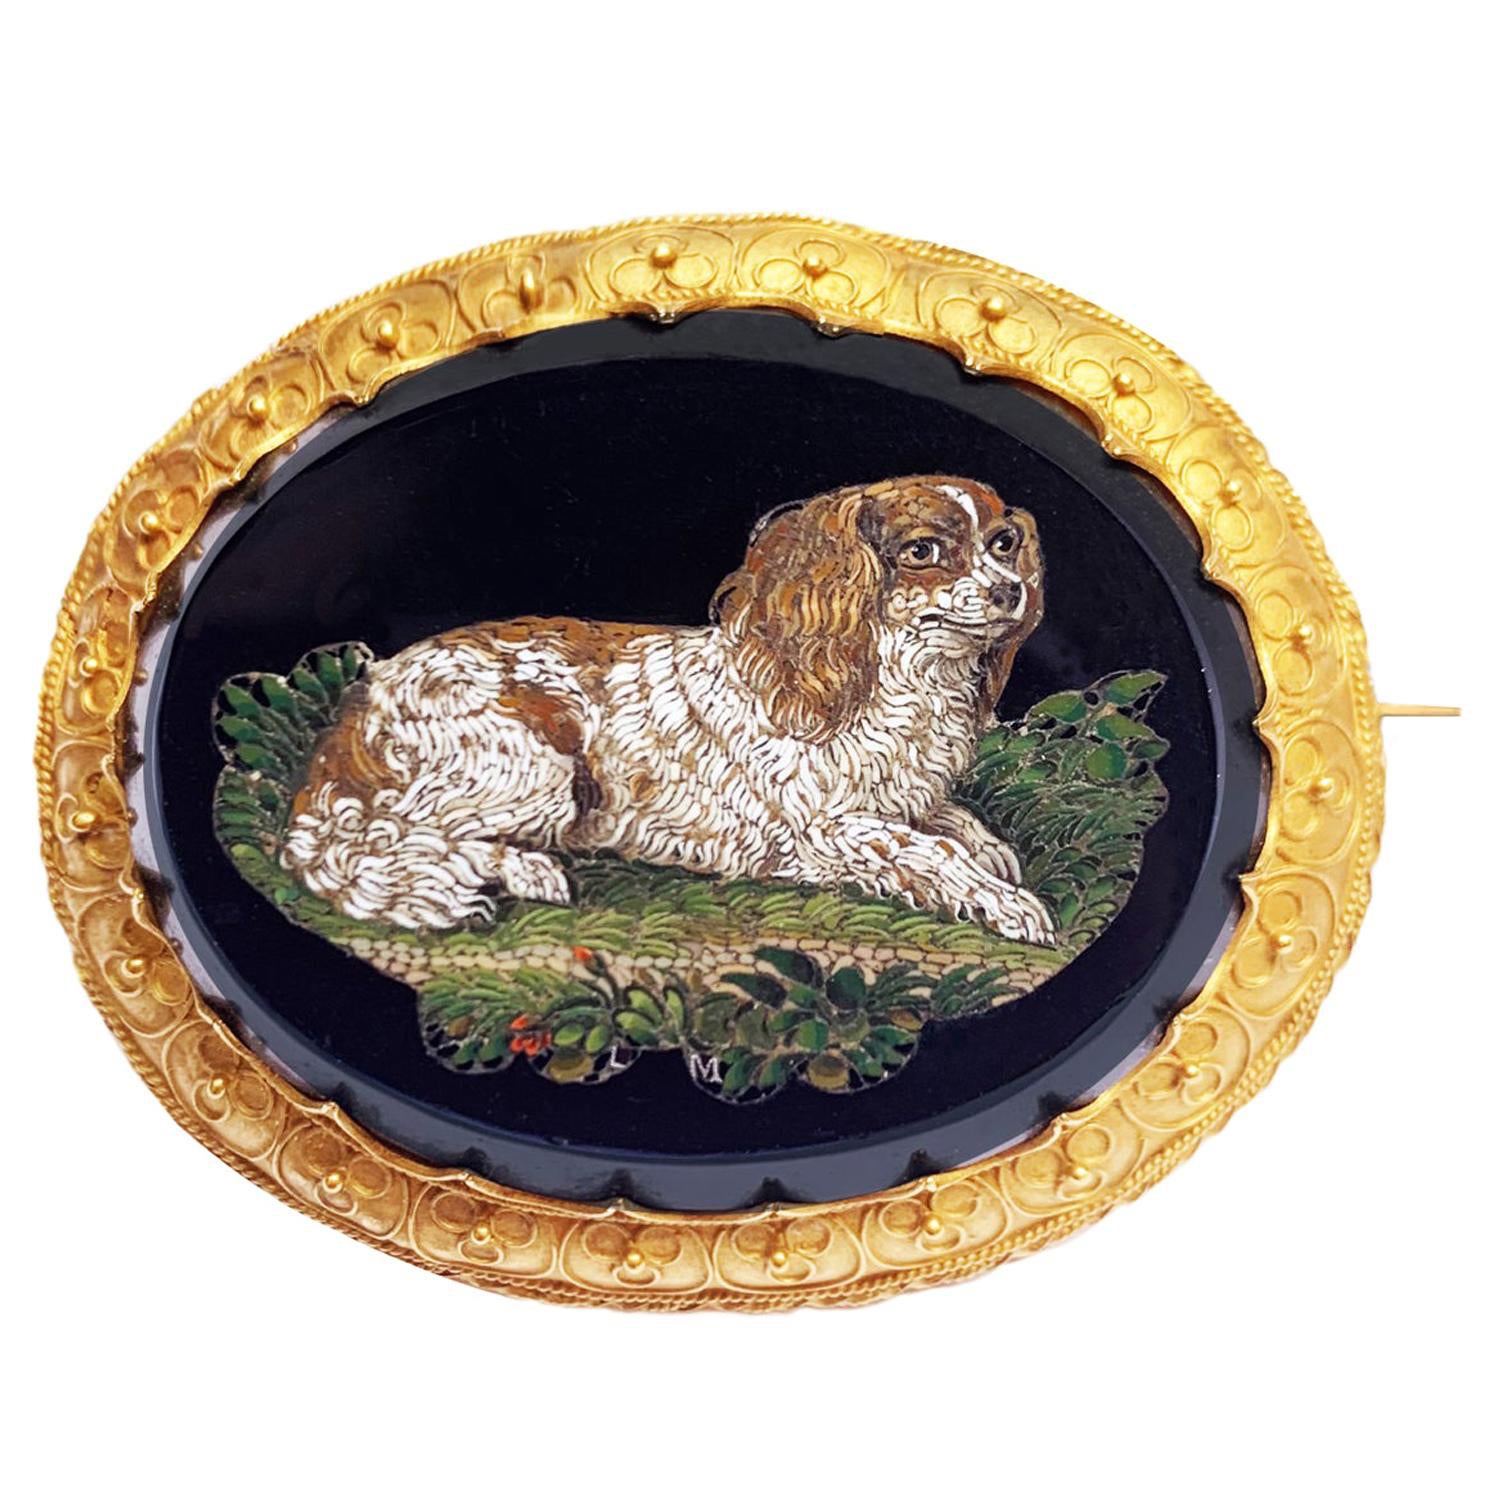 Micromosaic Brooch by Luigi Moglia Depicting a Little Phalene Dog